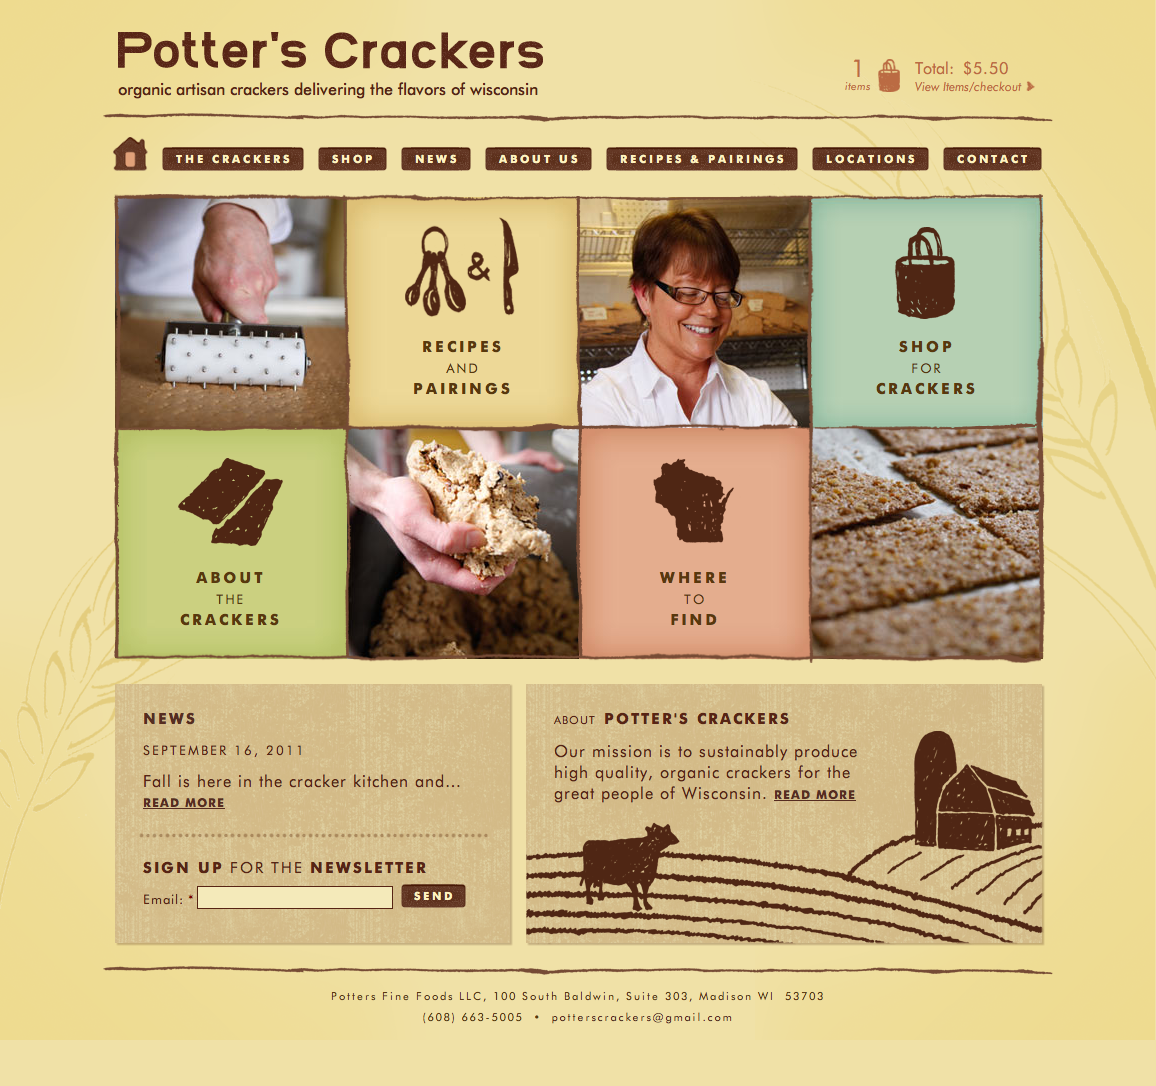 Potter’s Crackers